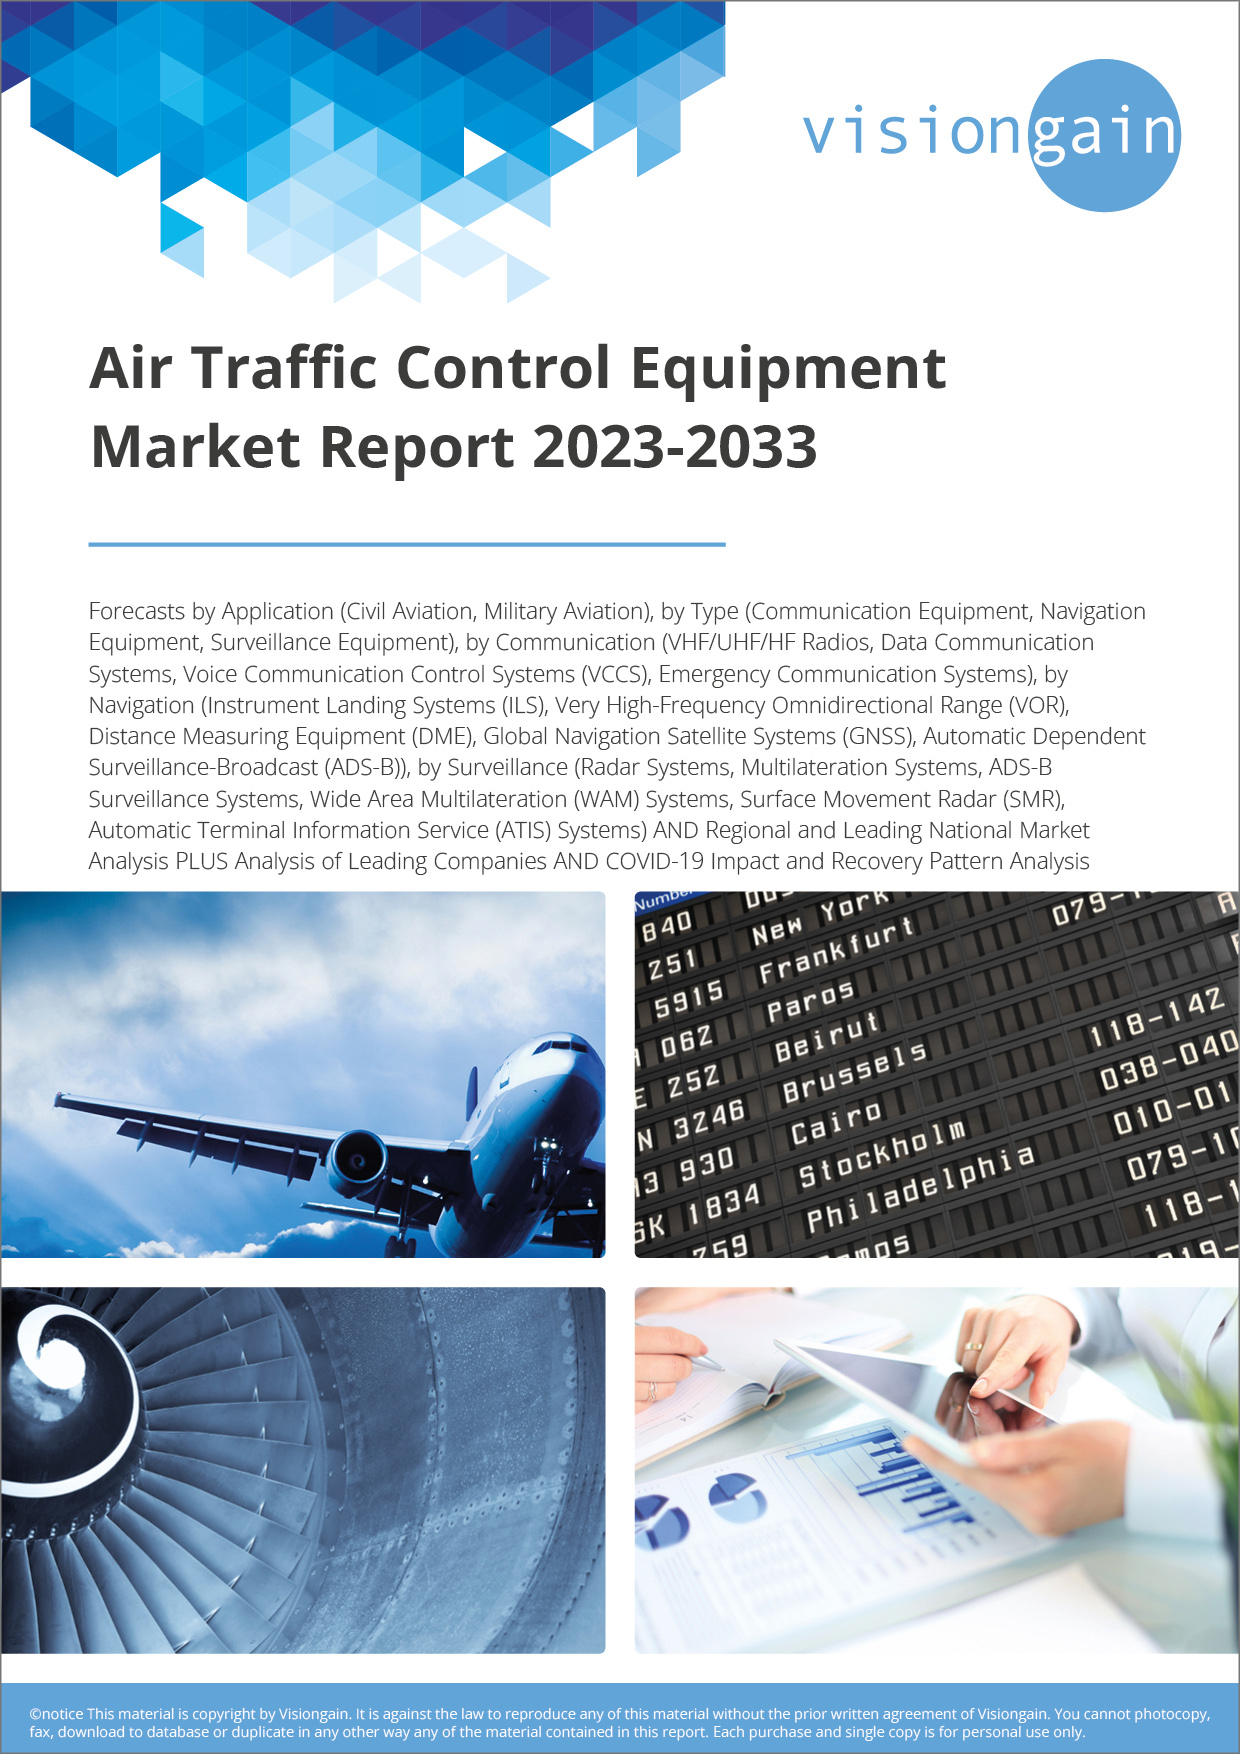 Air Traffic Control Equipment Market Report 2023-2033